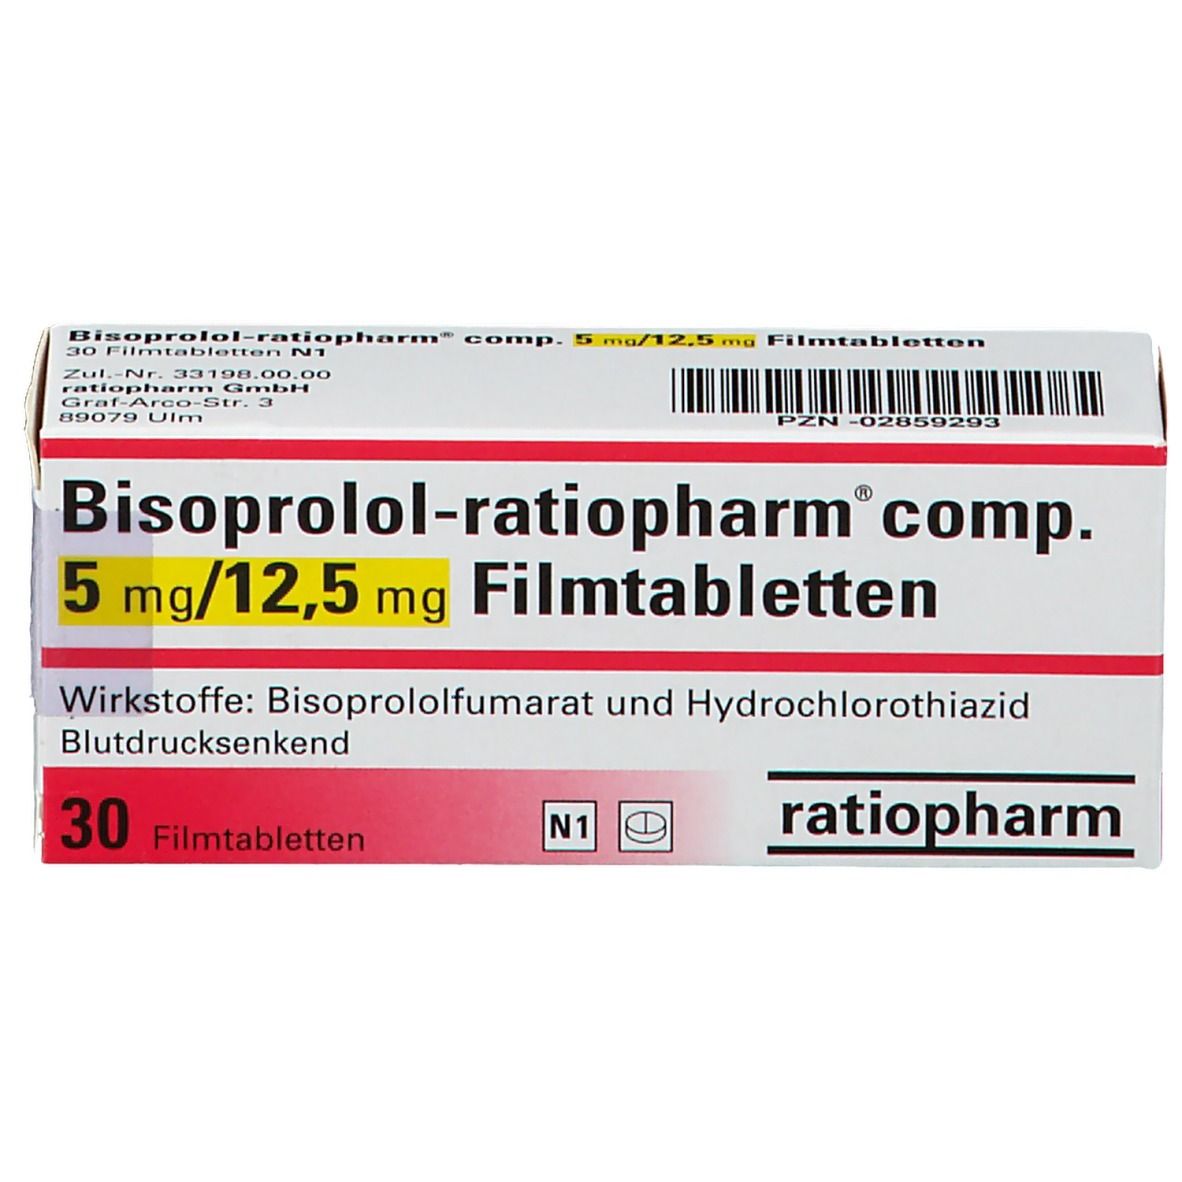 Bisoprolol-ratiopharm® comp. 5 mg/12,5 mg